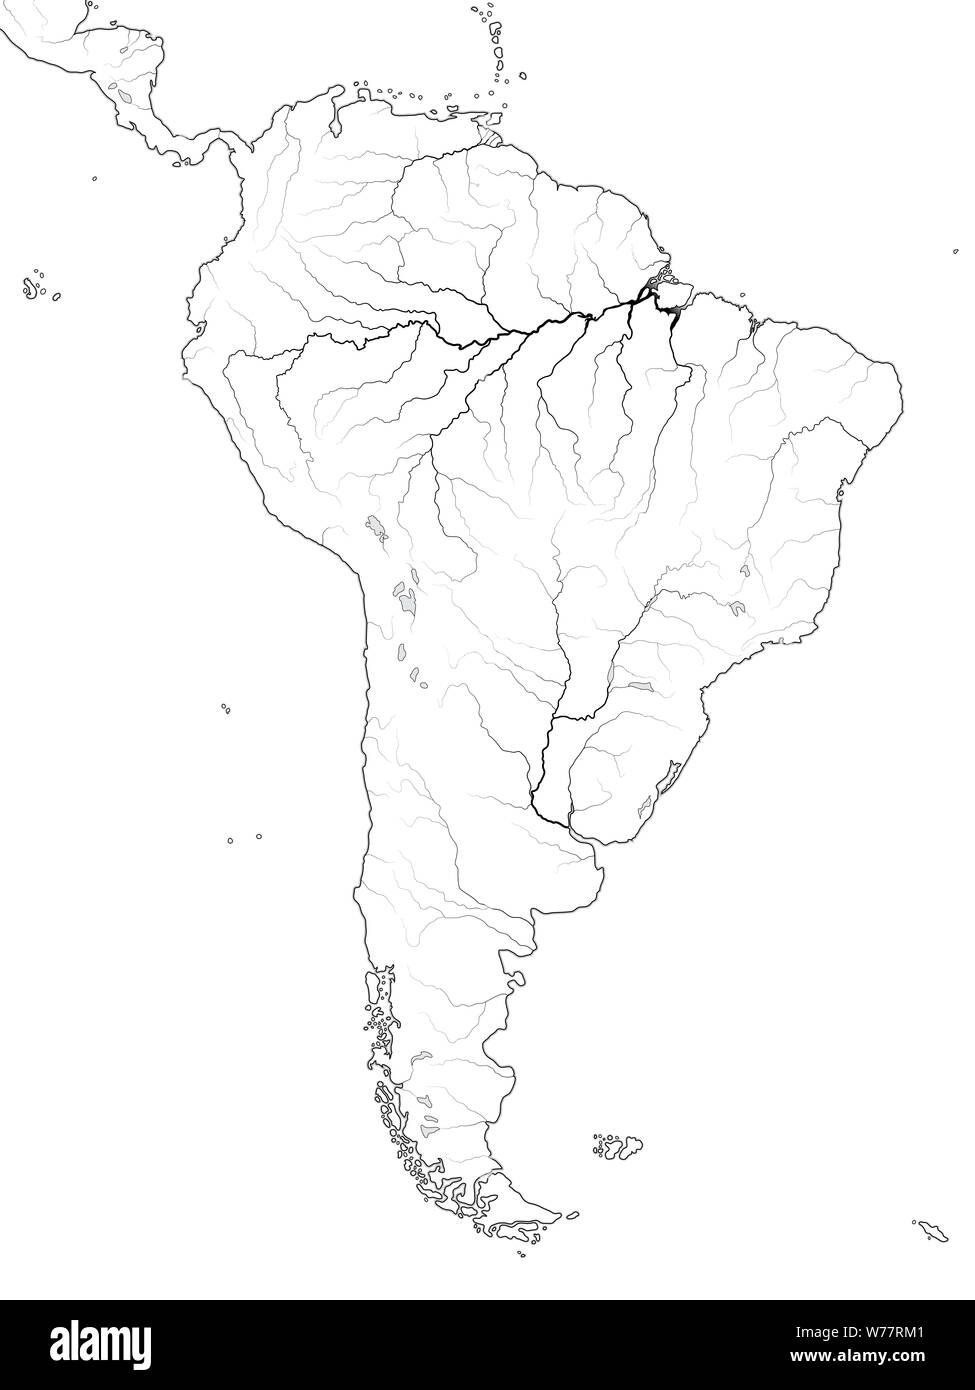 World Map of SOUTH AMERICA: Latin America, Argentina, Brazil, Peru, Andes, Cordilleras, Amazon River, Selva, Llanos, Pampa, Patagonia. Geochart. Stock Photo